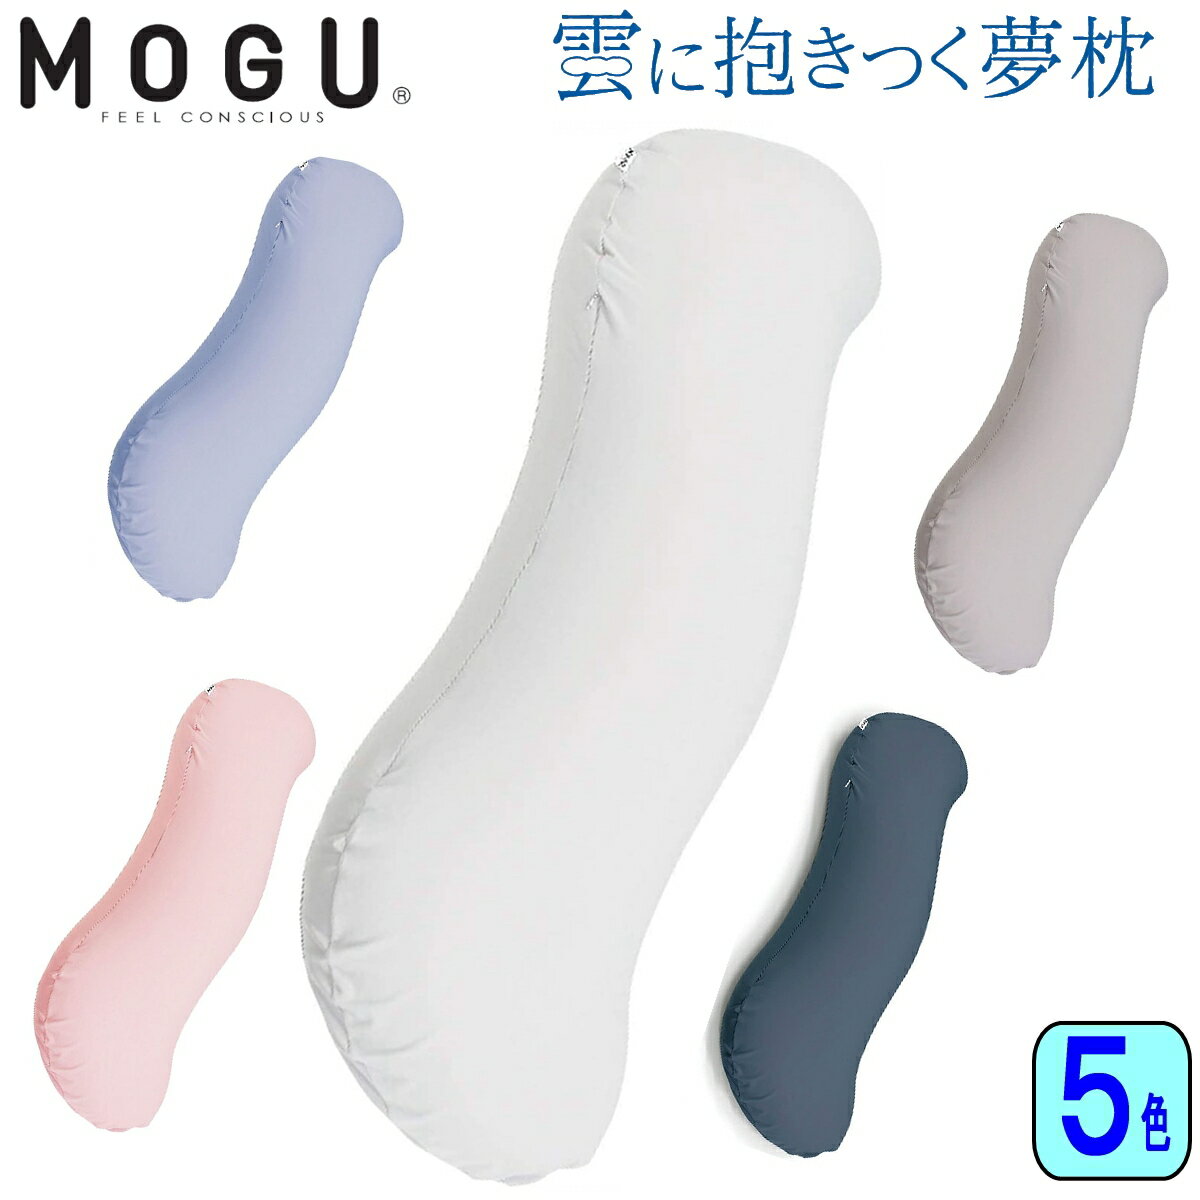 【P10倍】【あす楽】MOGU モグ 雲に抱きつく夢枕 カバー付き 抱き枕 日本製 パウダービーズ 全5色